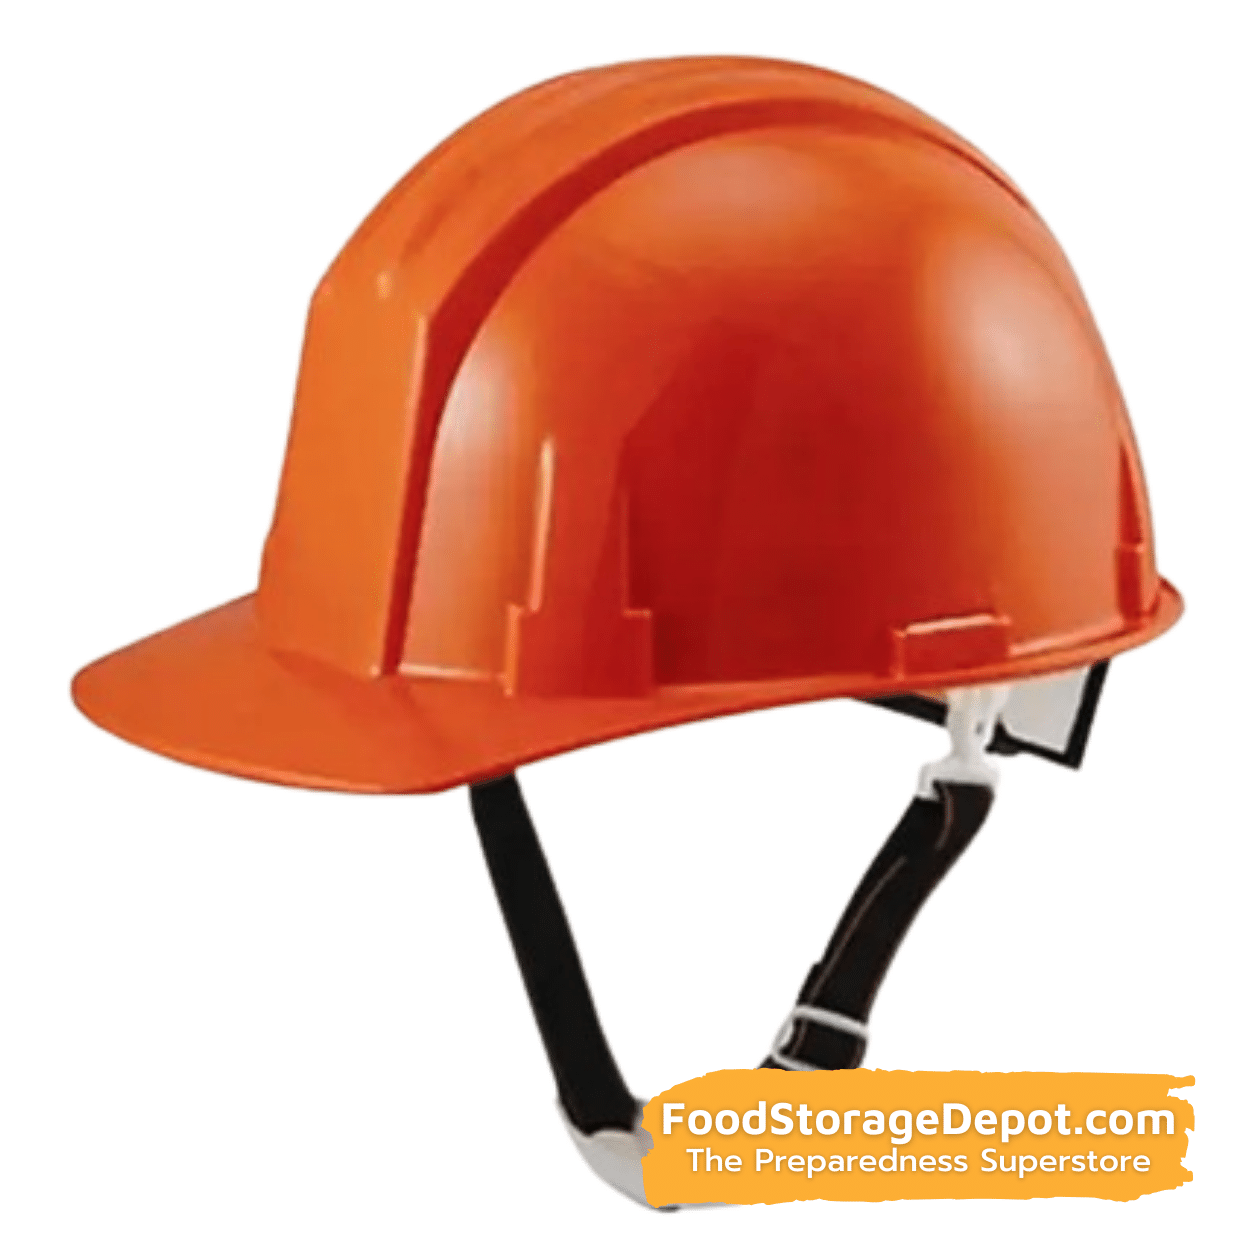 Orange Emergency Hard Hat With Adjustable Chin Strap (ANSI Approved)